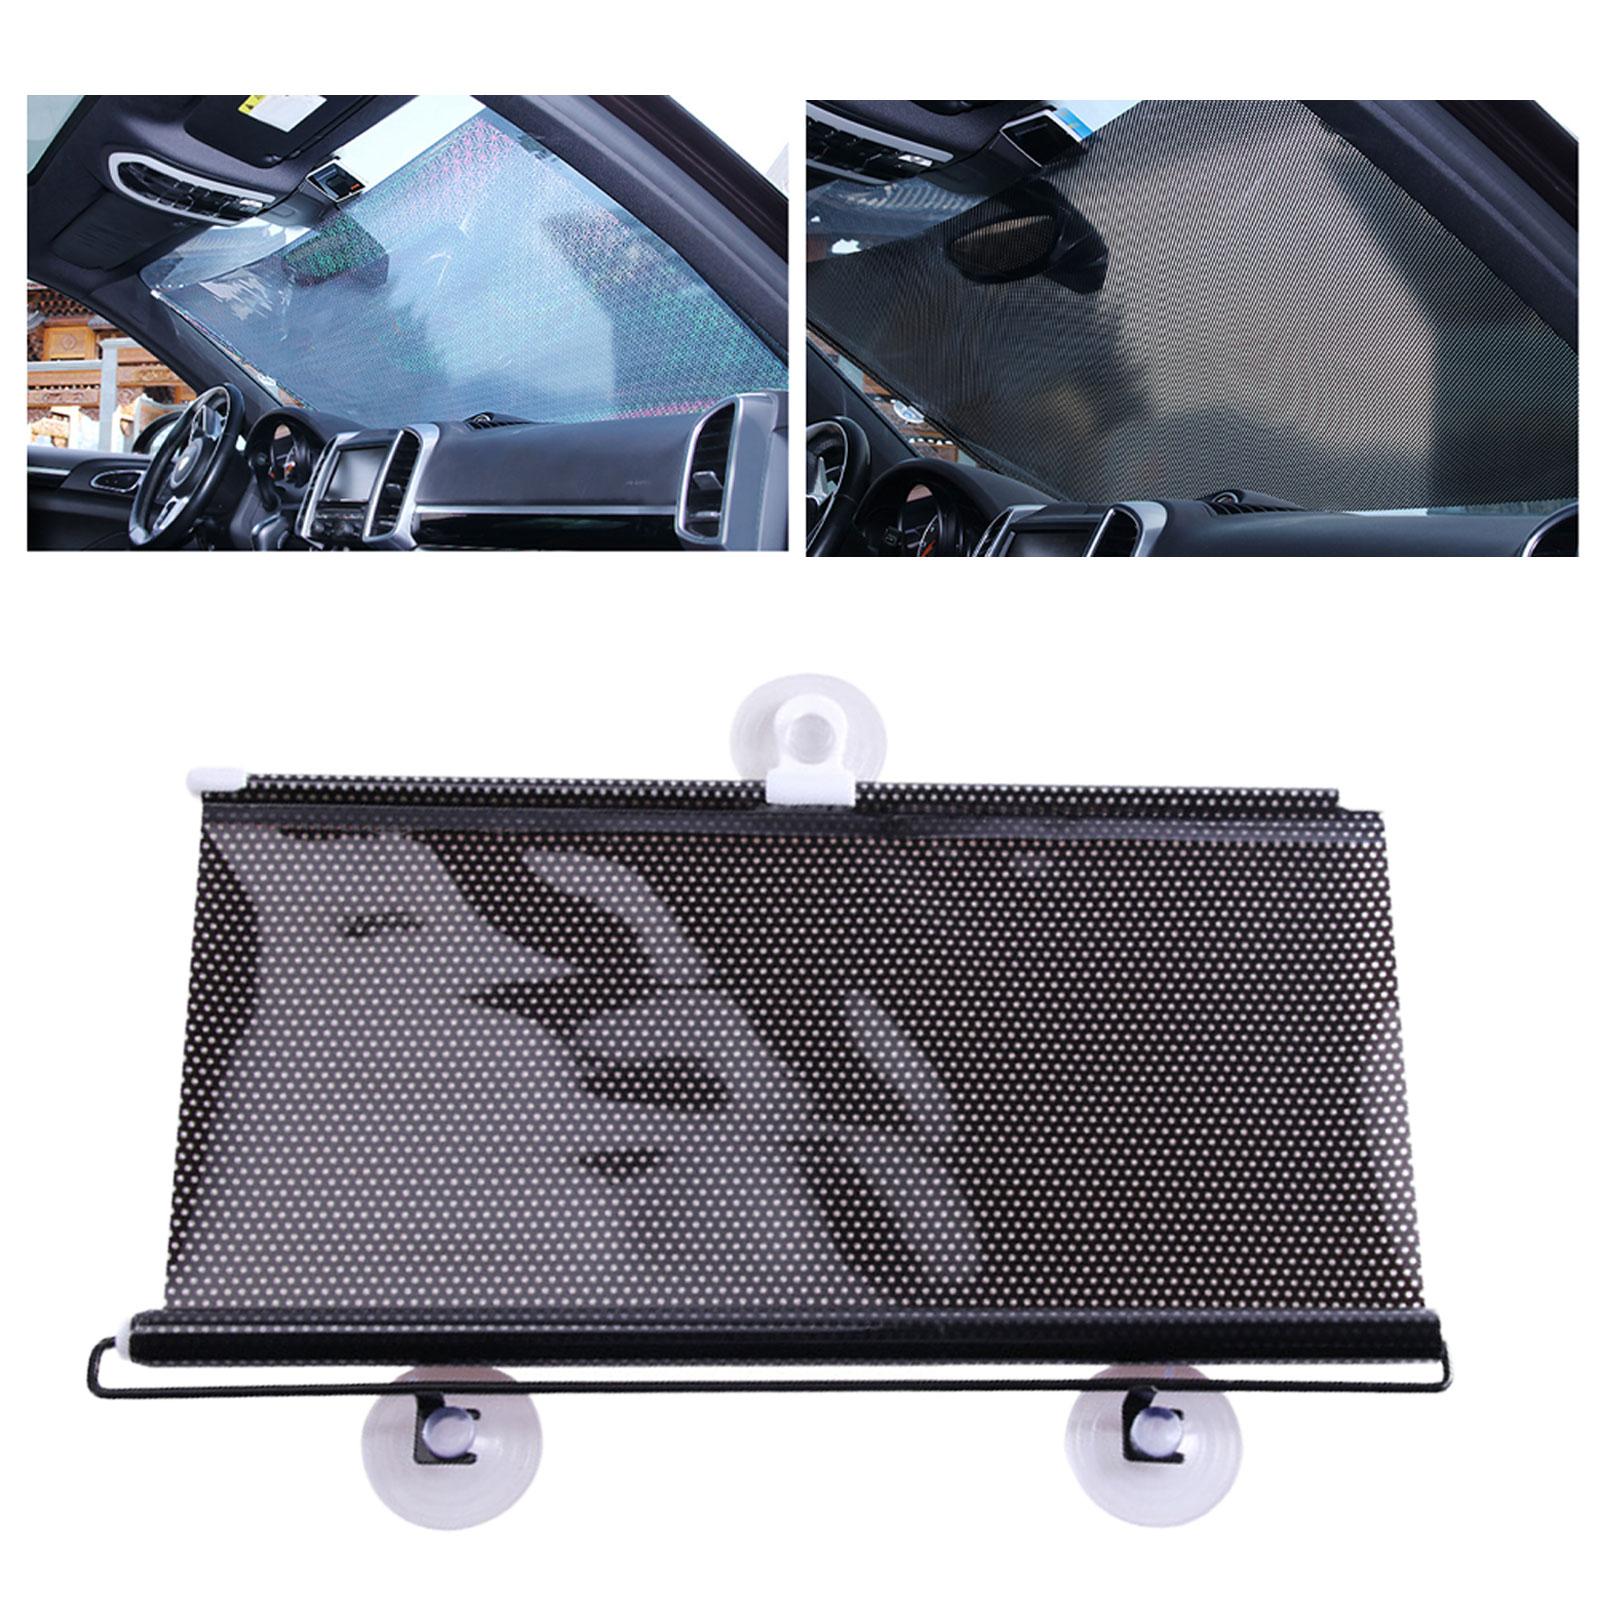 Car Windshield Sunshade Block UV Rays Car Shade for Most Cars, Vehicles 50cmx125cm